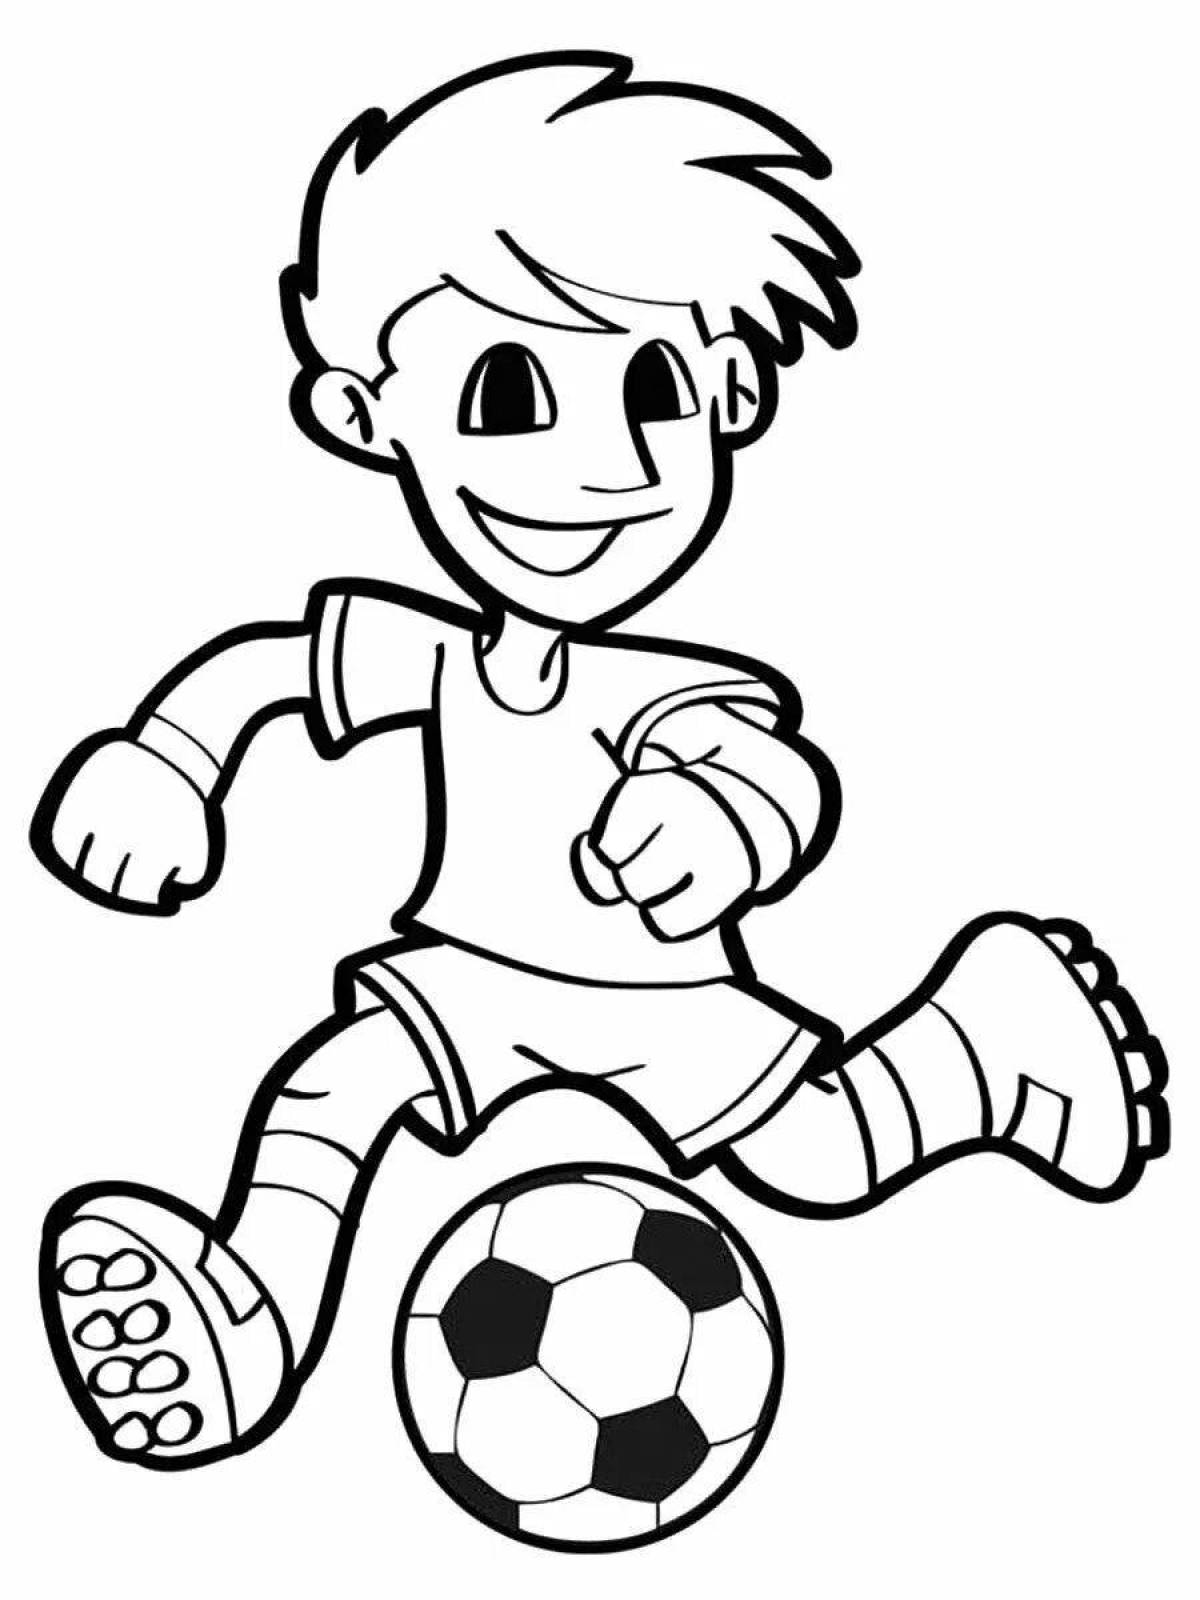 Coloring book playful boy playing football